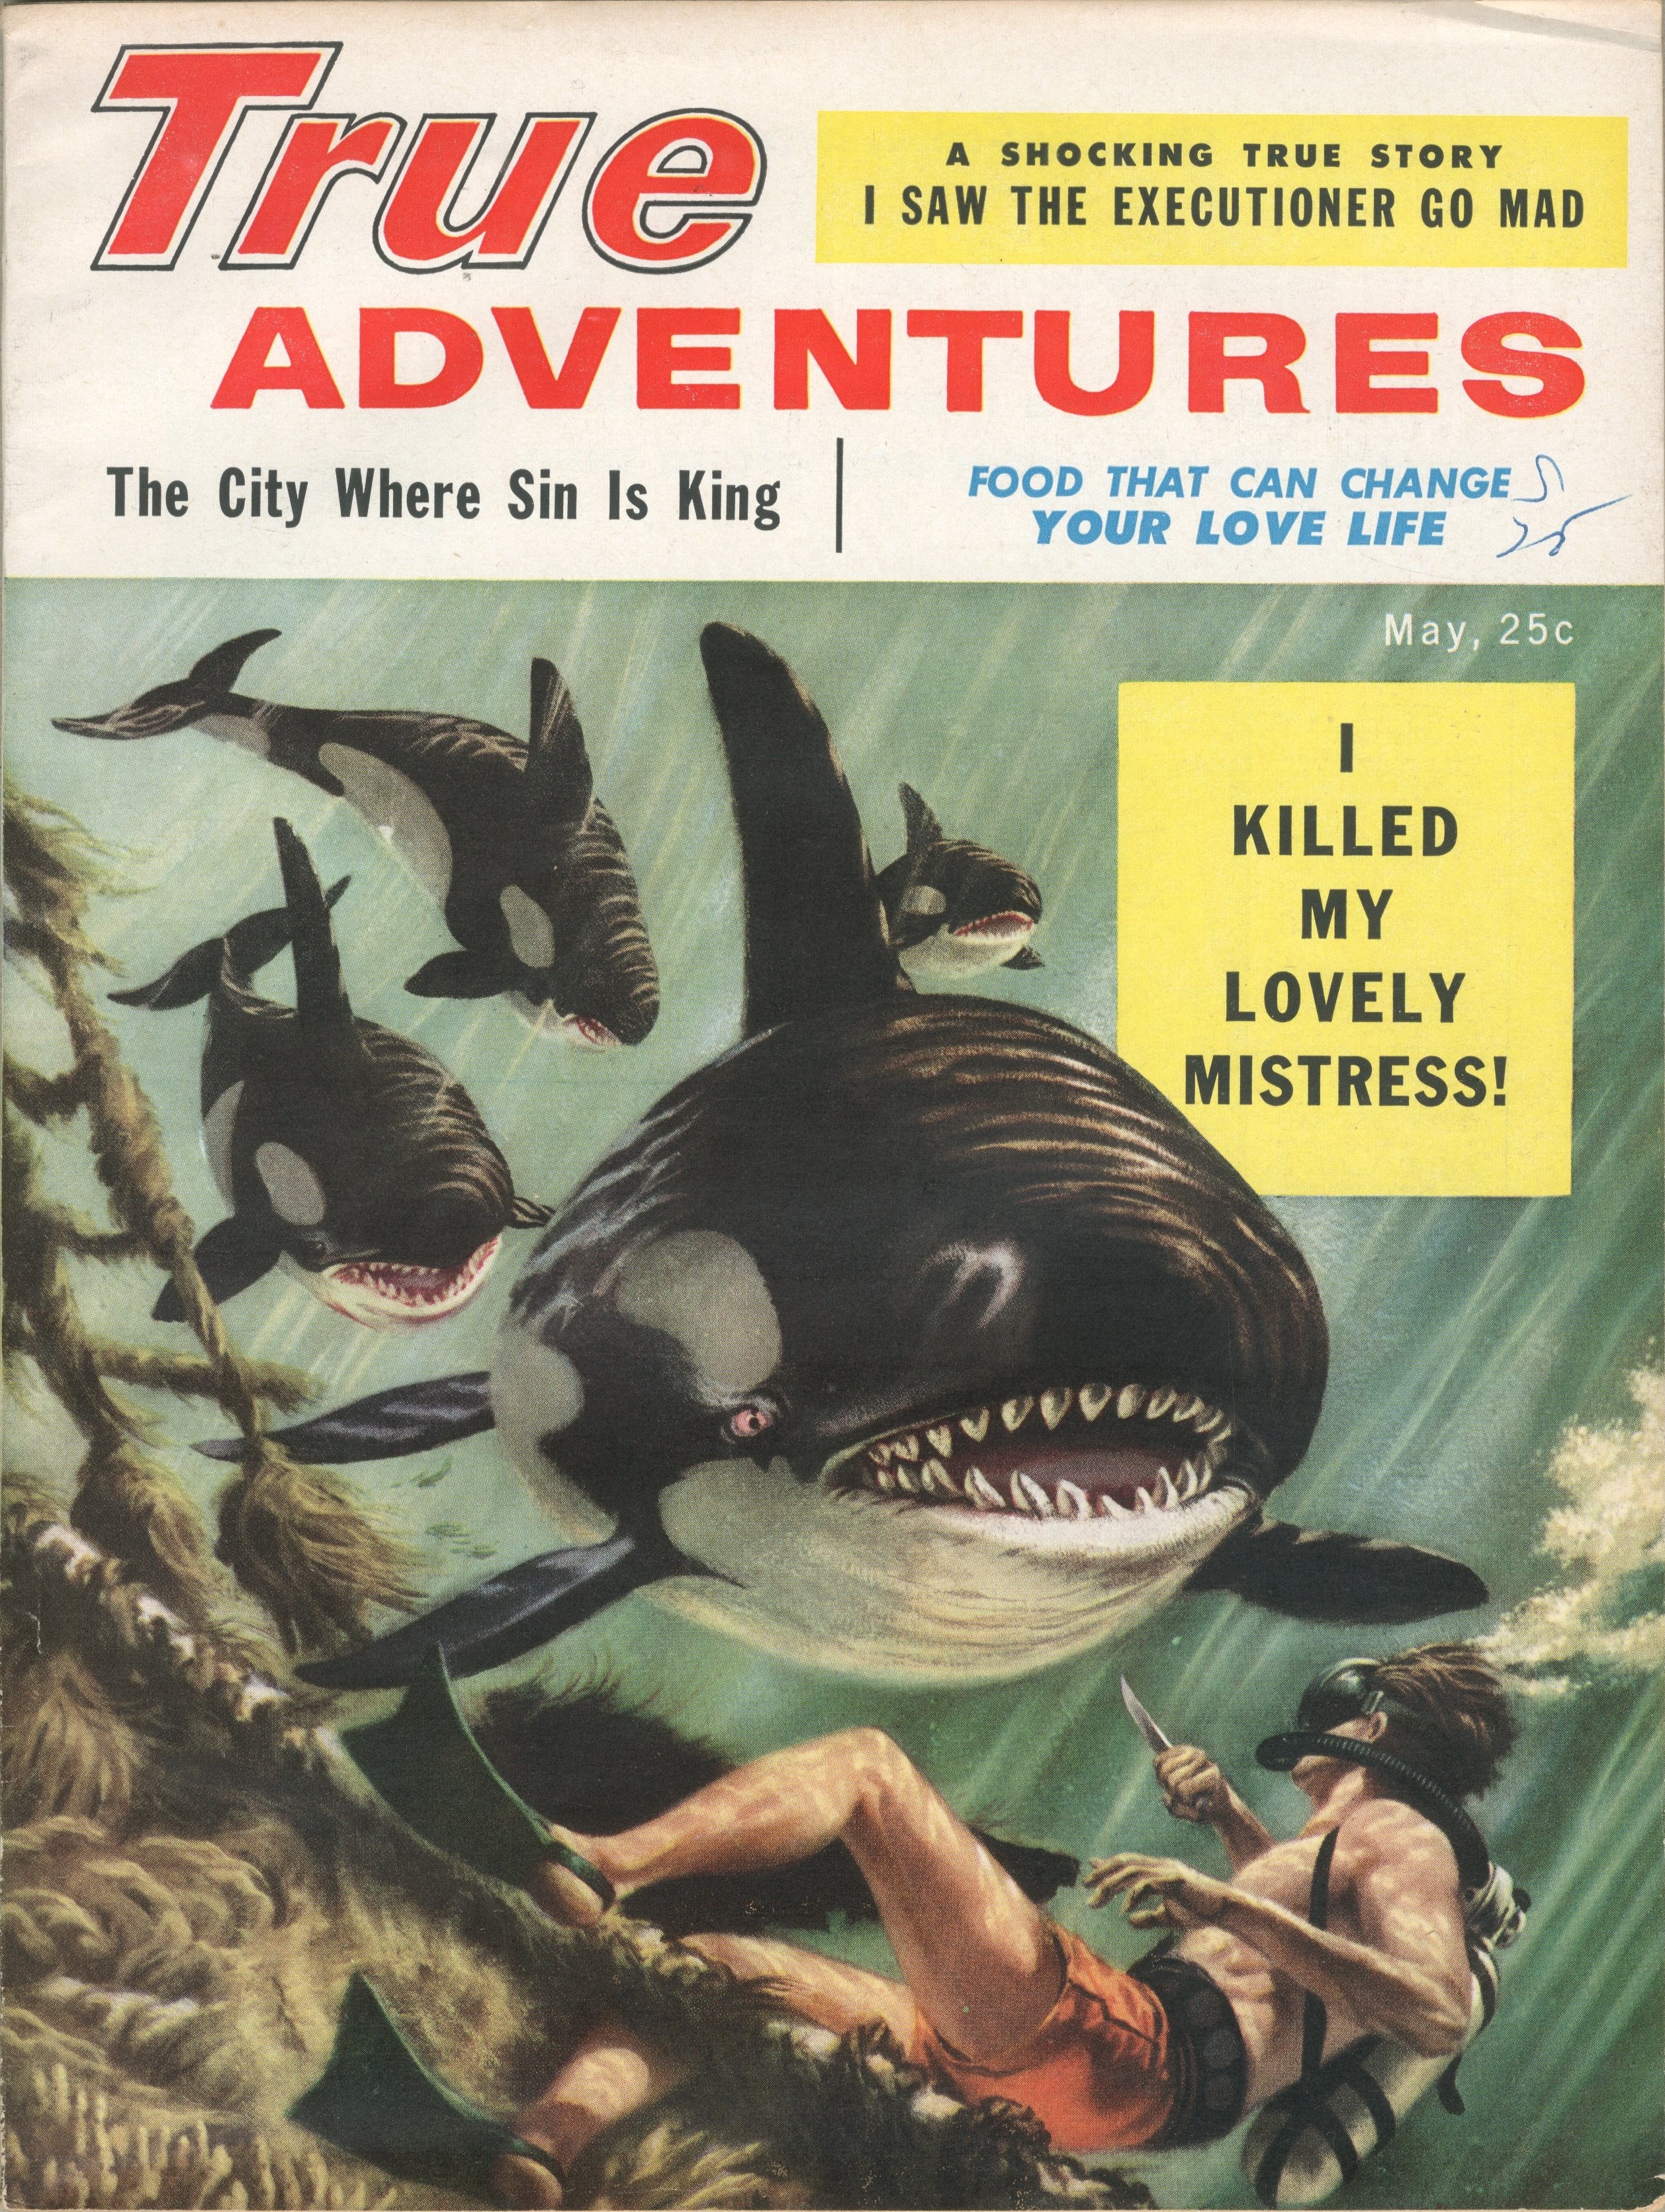 Adventures magazine. Dave the Diver обложка. True Adventure Magazine pdf. It's a man's World men's Adventures Magazine.